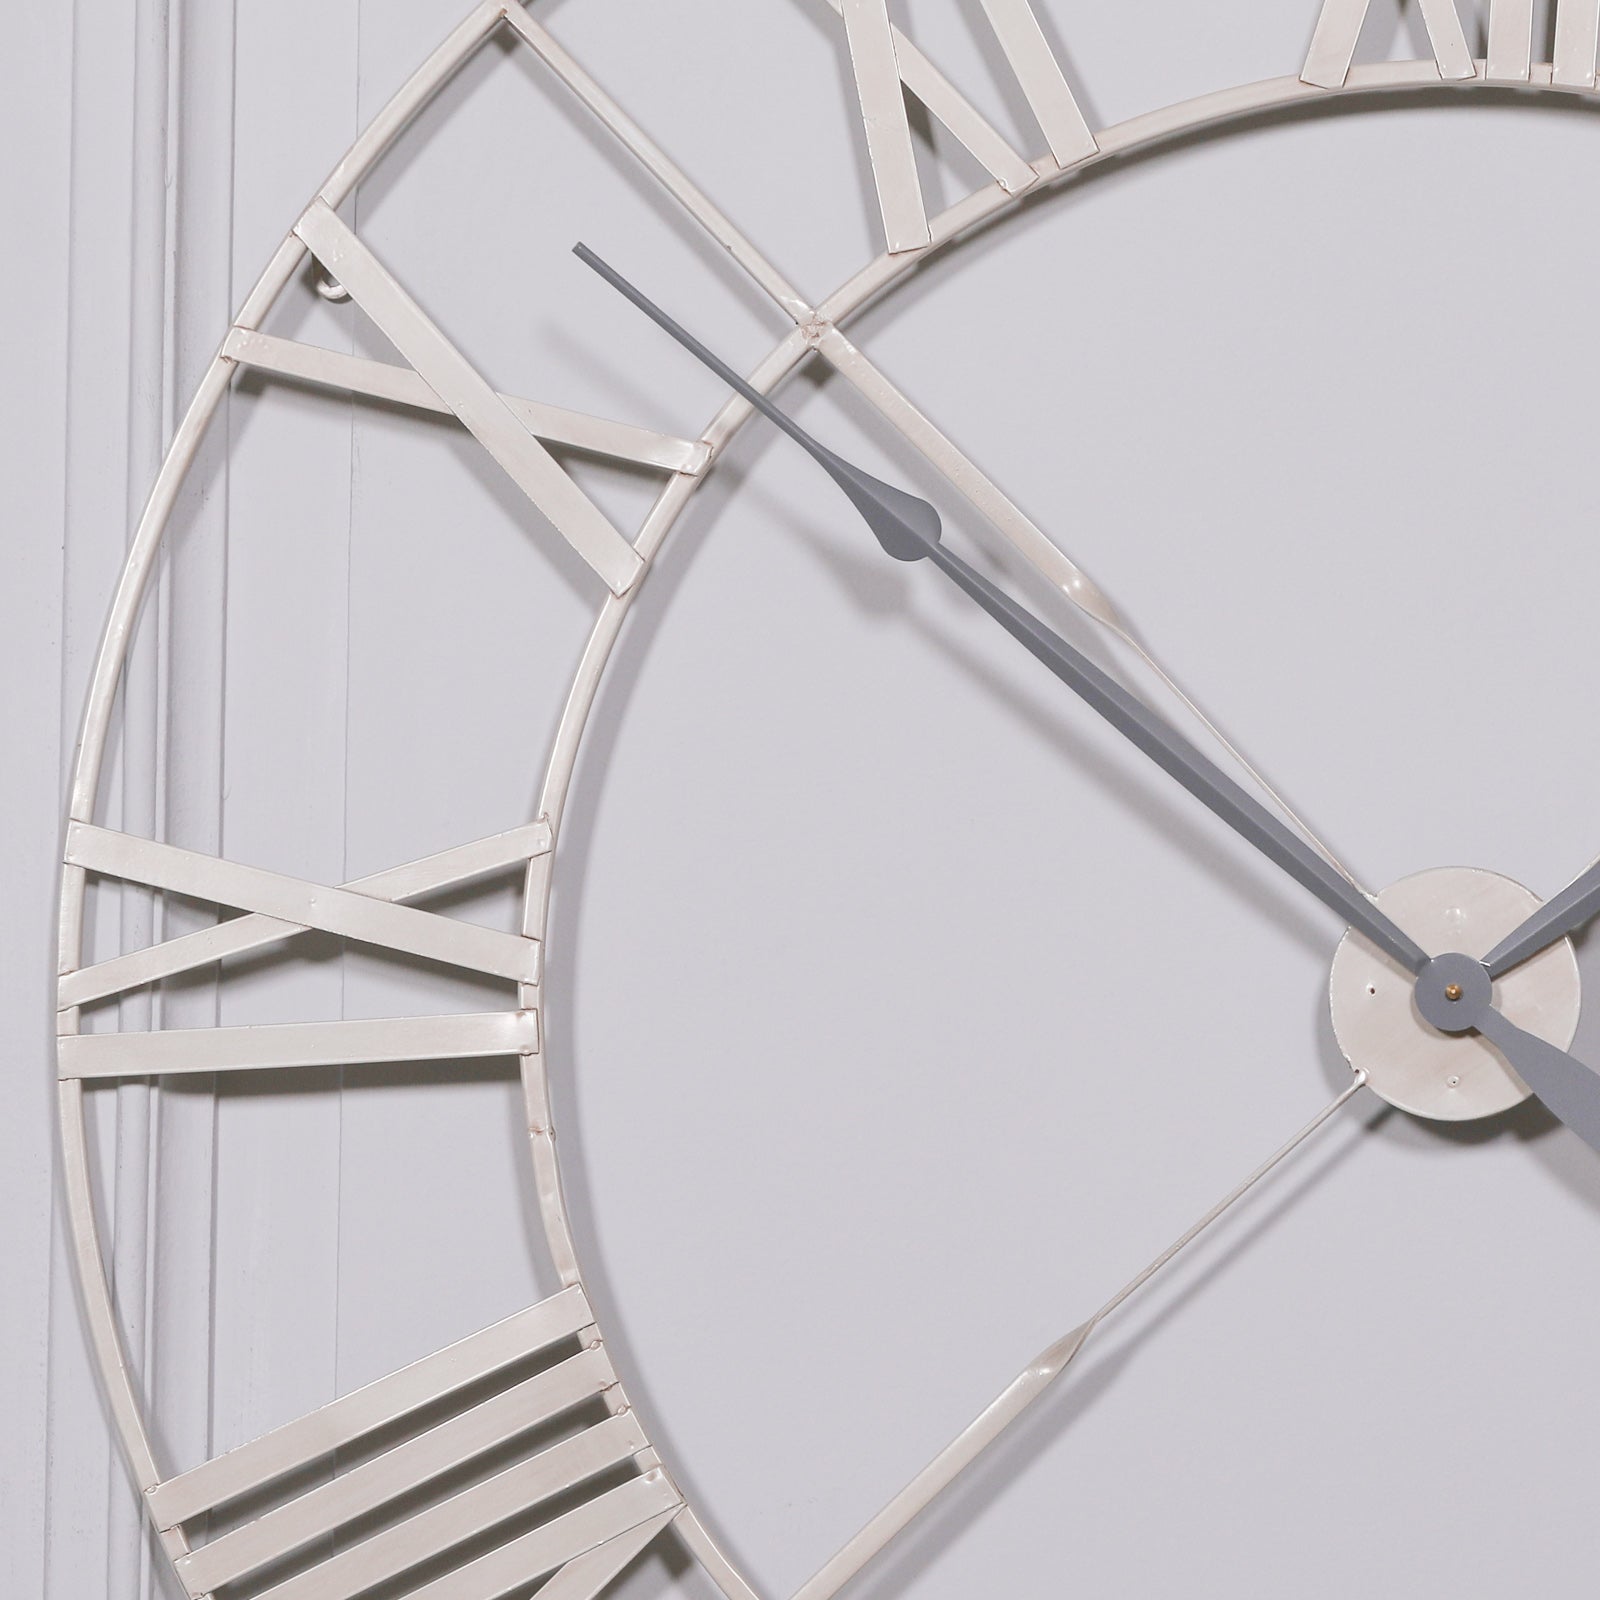 Vintage Cream Distressed 110cm Twist Frame Wall Clock CasaFenix